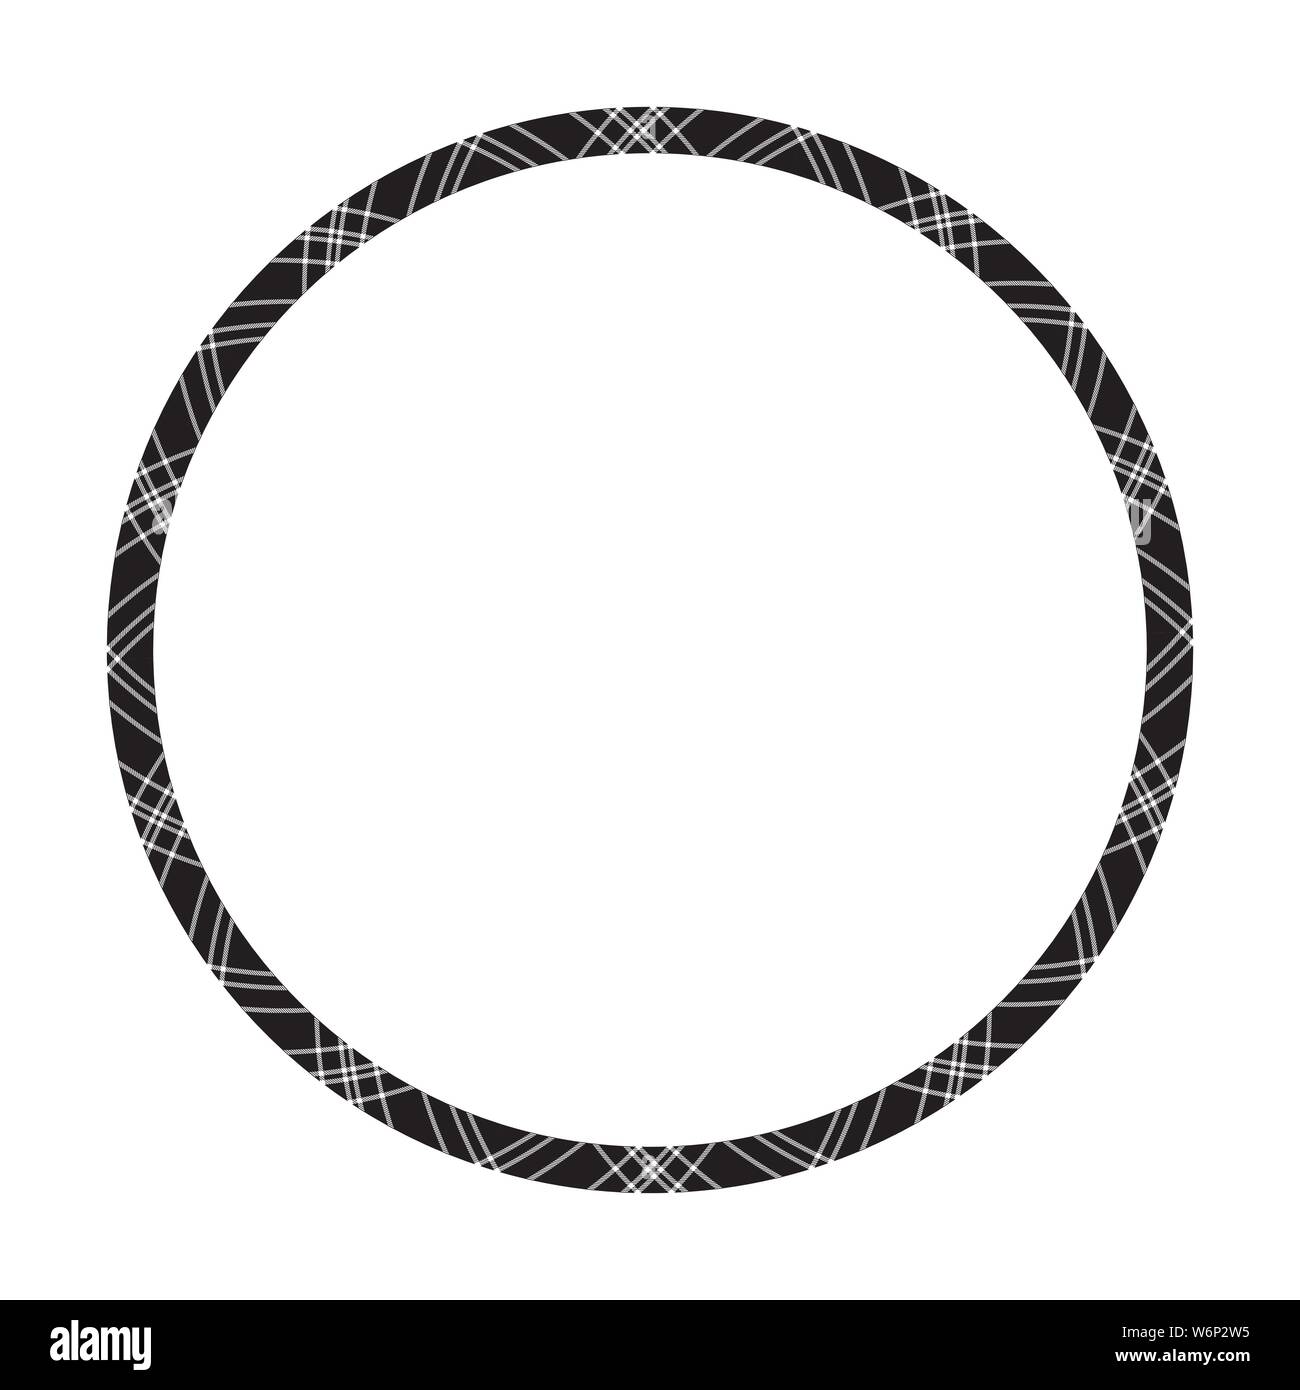 Circle Frame Border  Circle frames, Circle borders, Circle